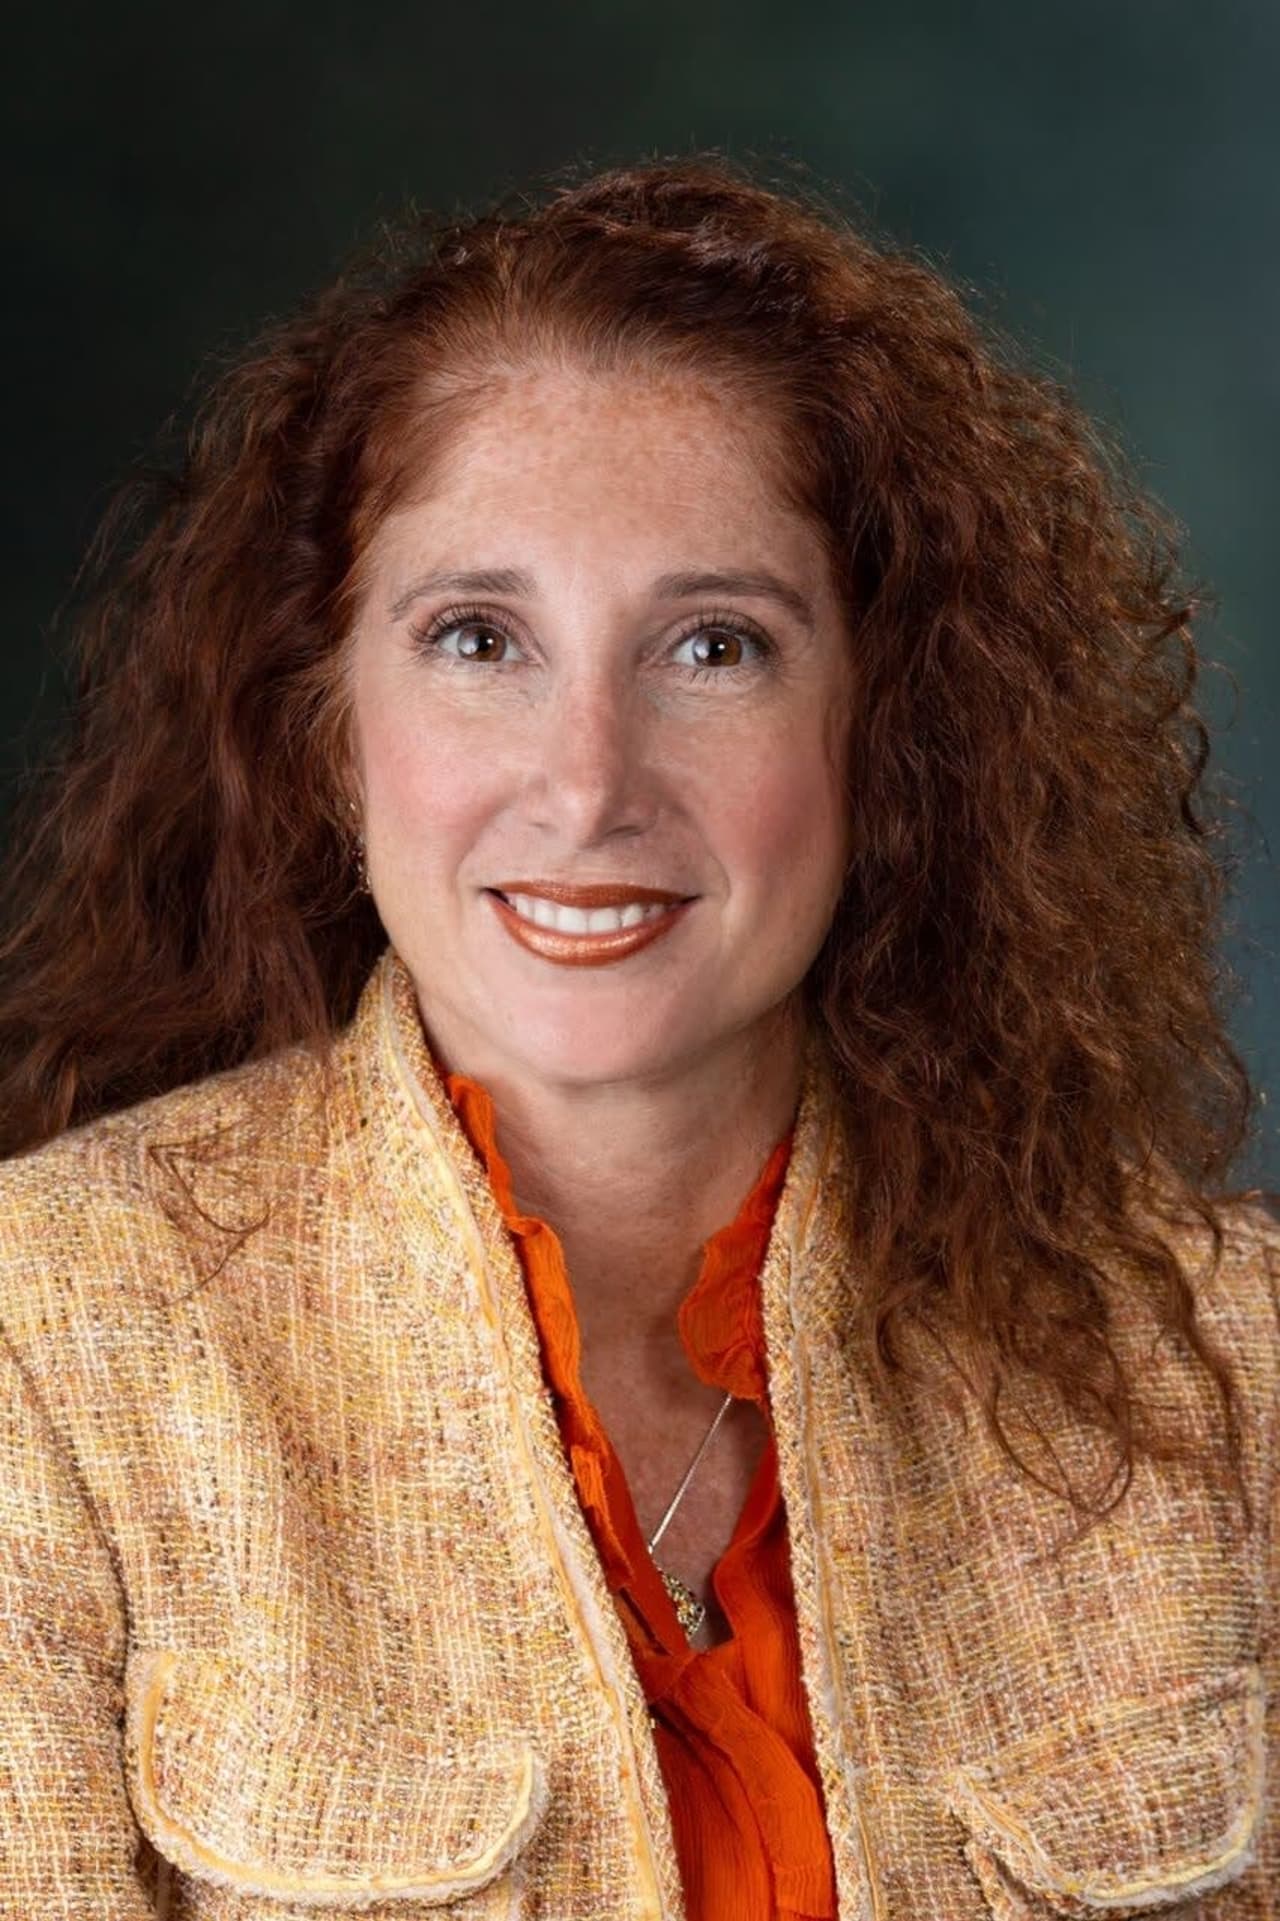 Dr. Laura Feijoo